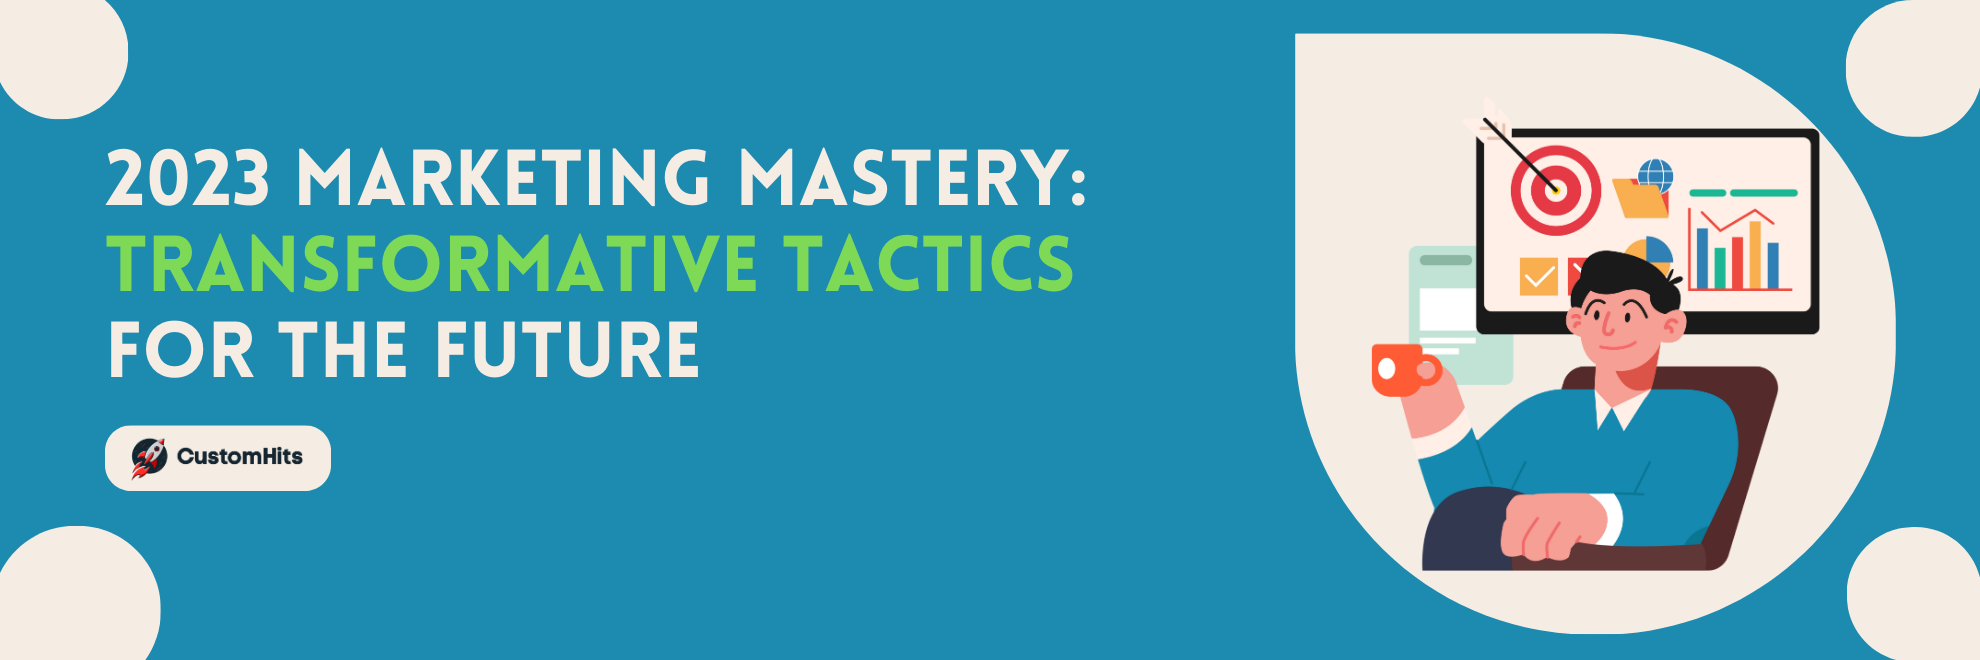 2023 Marketing Mastery: Transformative Tactics for the Future